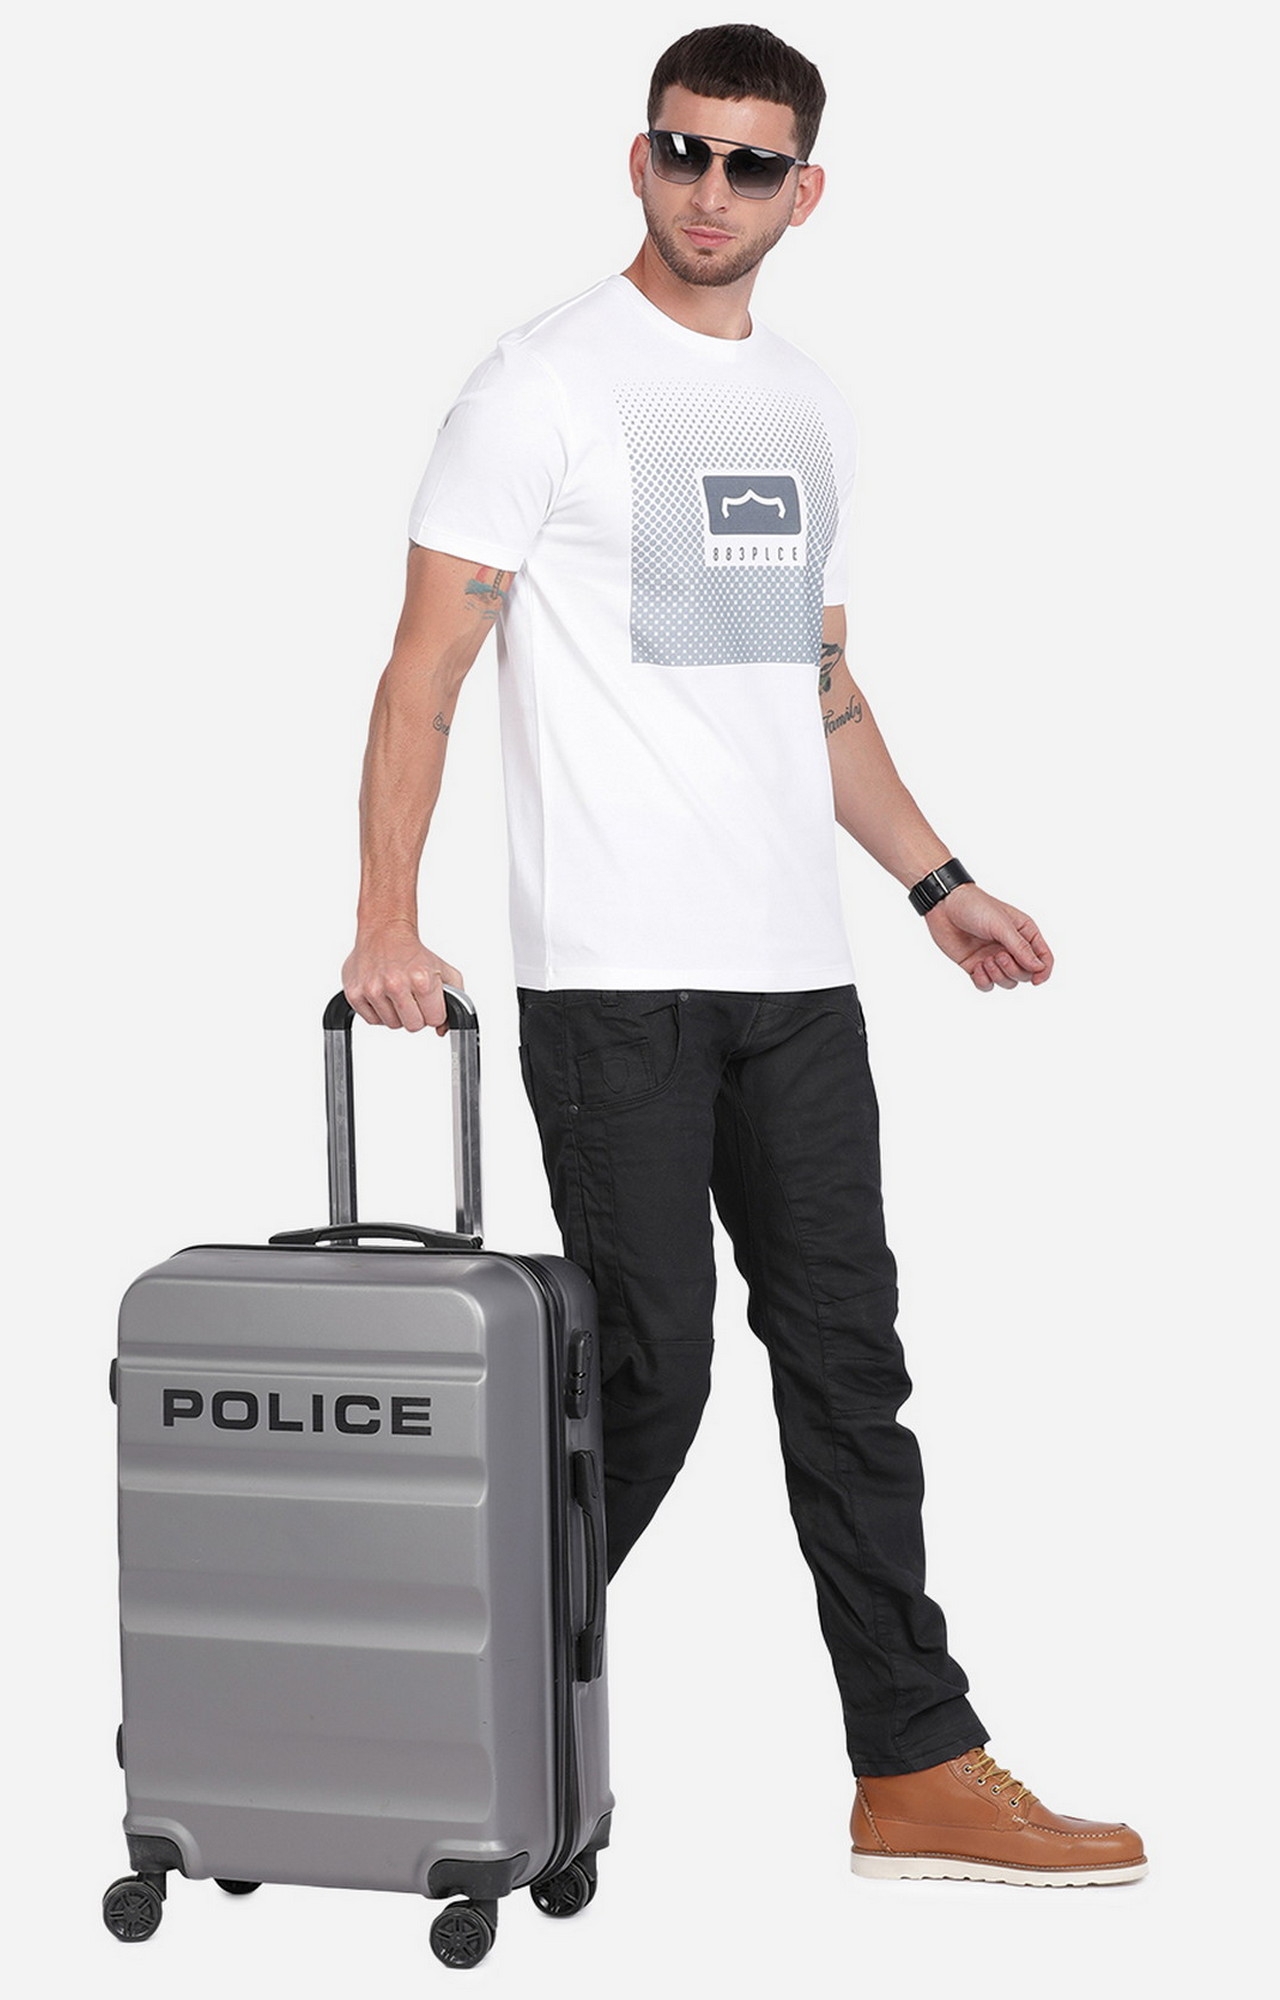 883 Police | Men's White Cotton Graphics T-Shirt 7